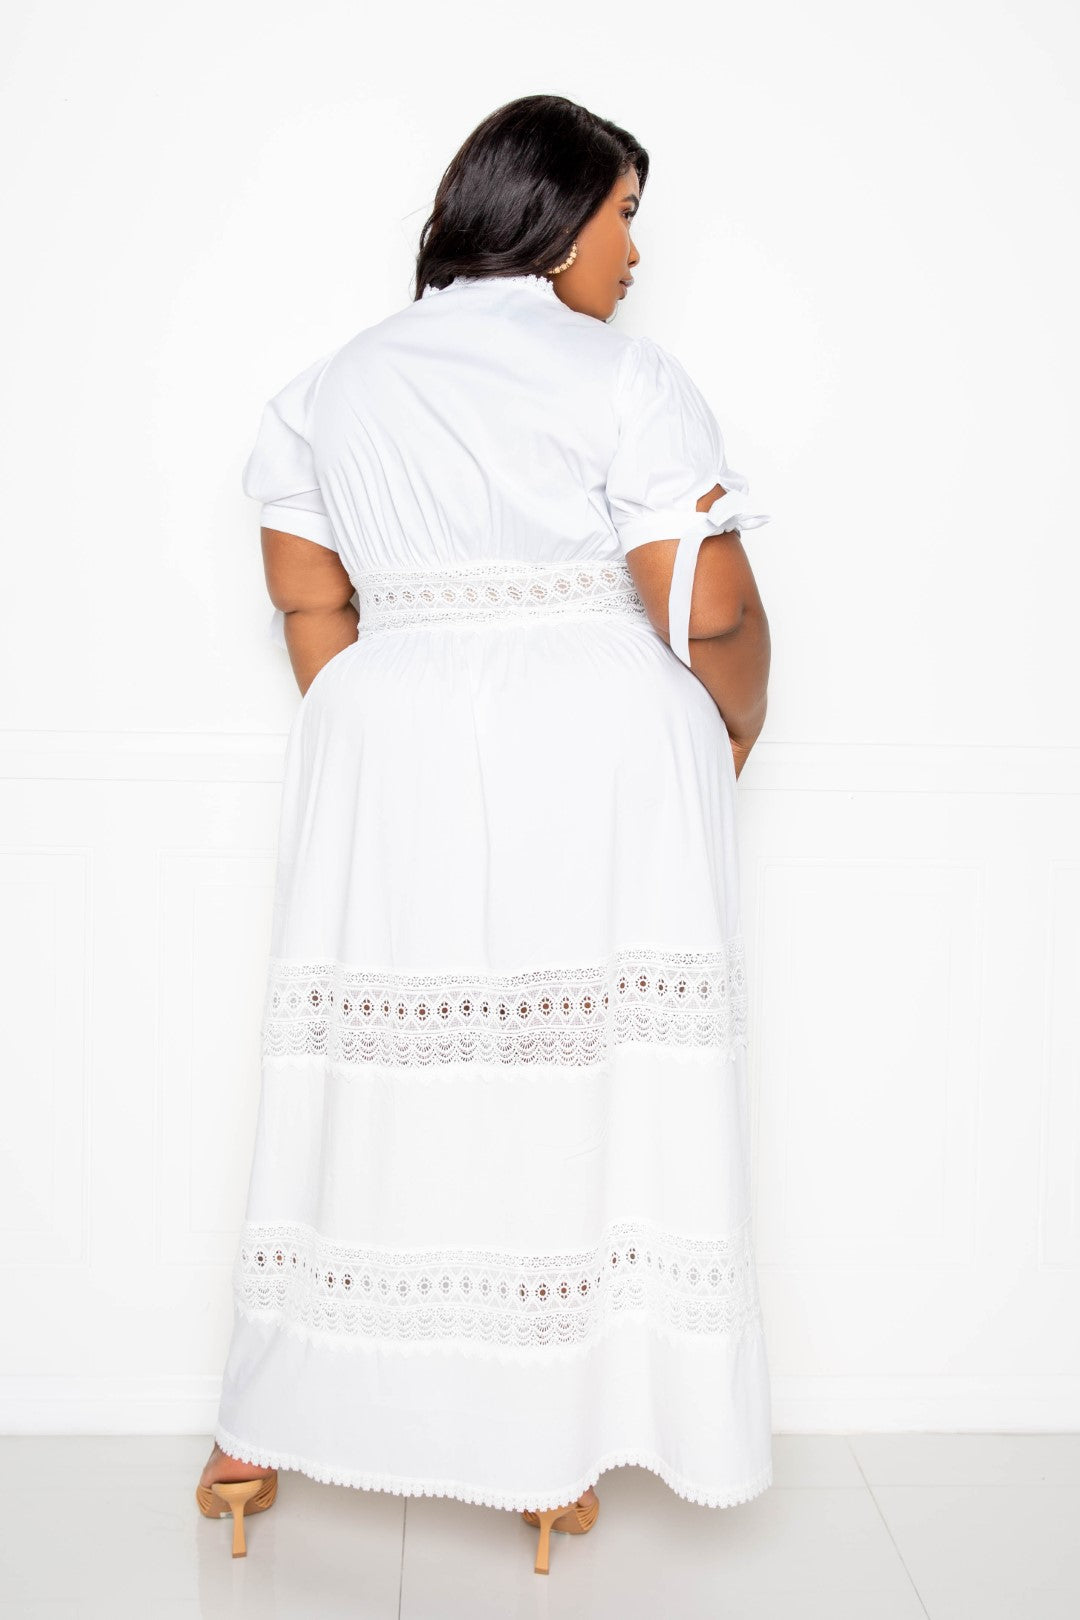 Plus Size White Puff Sleeve Maxi Dress With Lace Insert Dresses jehouze 